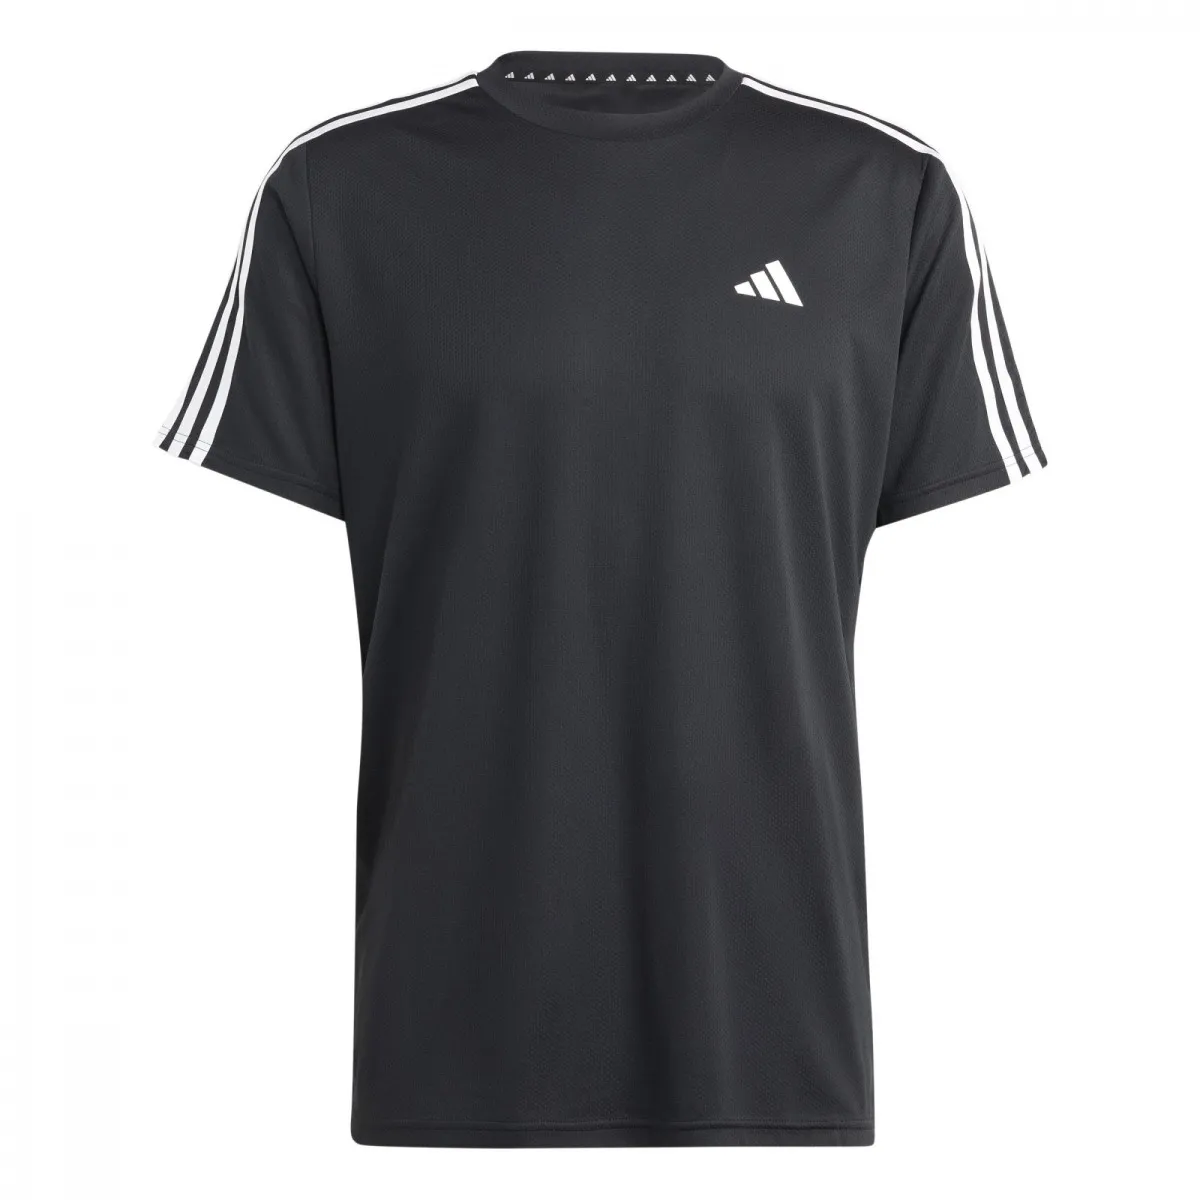 Camiseta adidas TR-ES Base negra/blanca